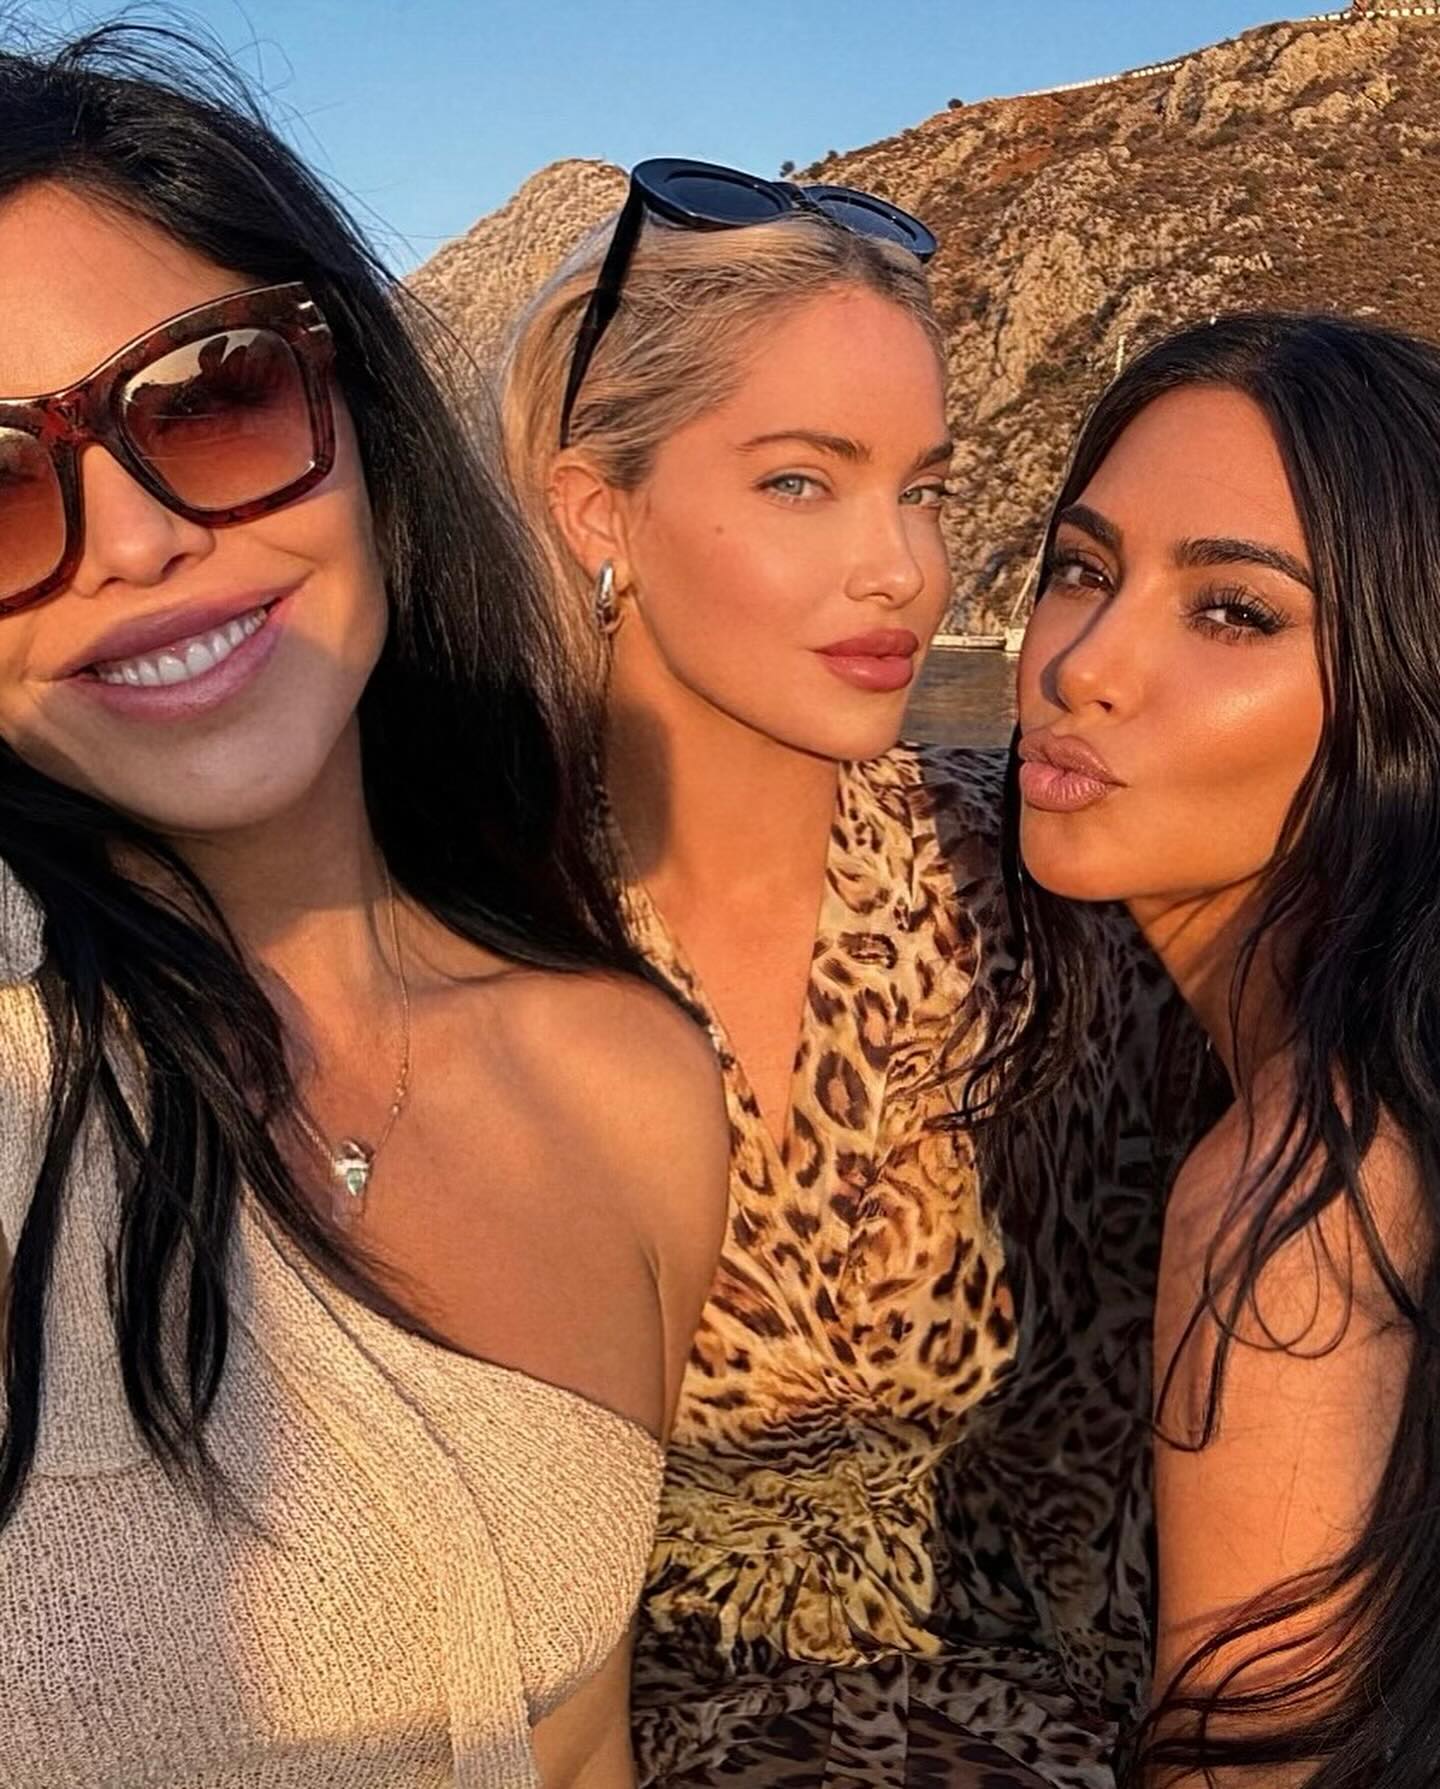 Kim Kardashian with friends during a recent trip to Greece